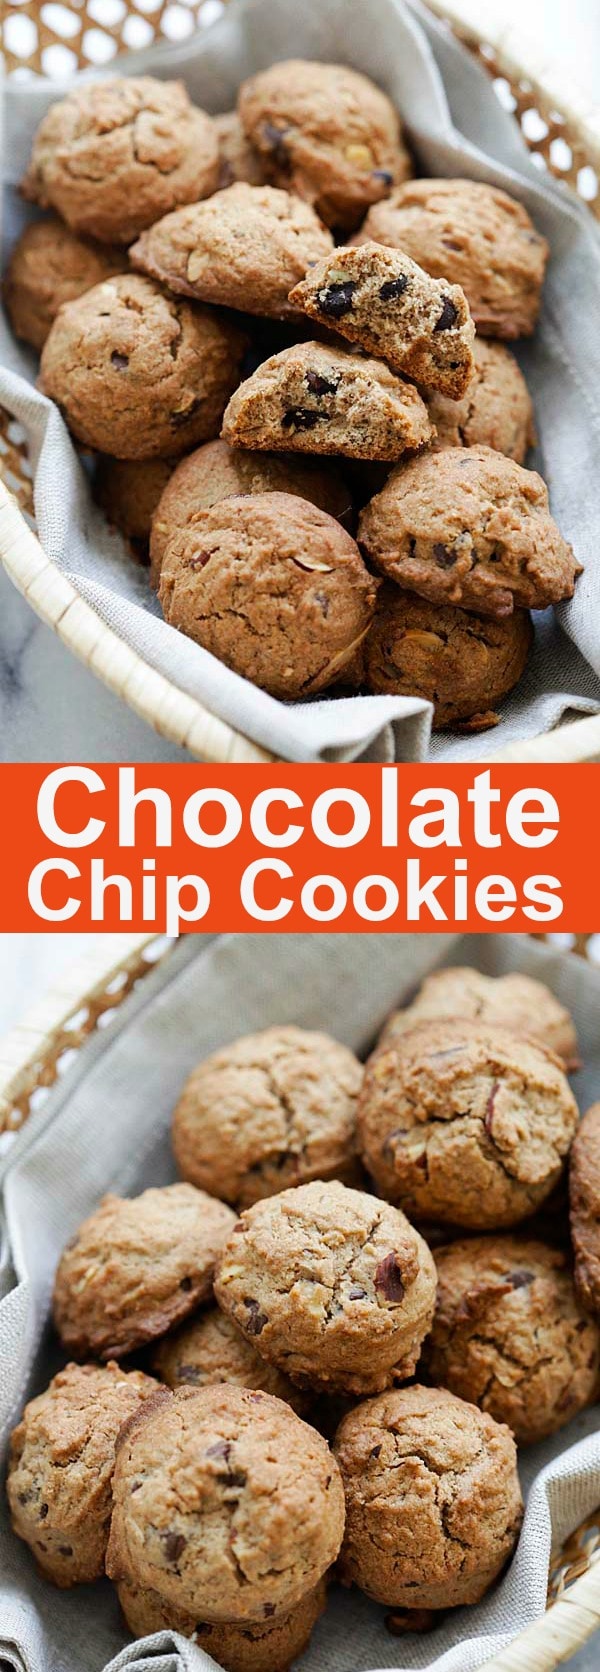 Easy chocolate chip cookies recipe that yields buttery chocolate chip cookies. Say hello to freshly baked chocolate chip cookies from your own oven. | rasamalaysia.com